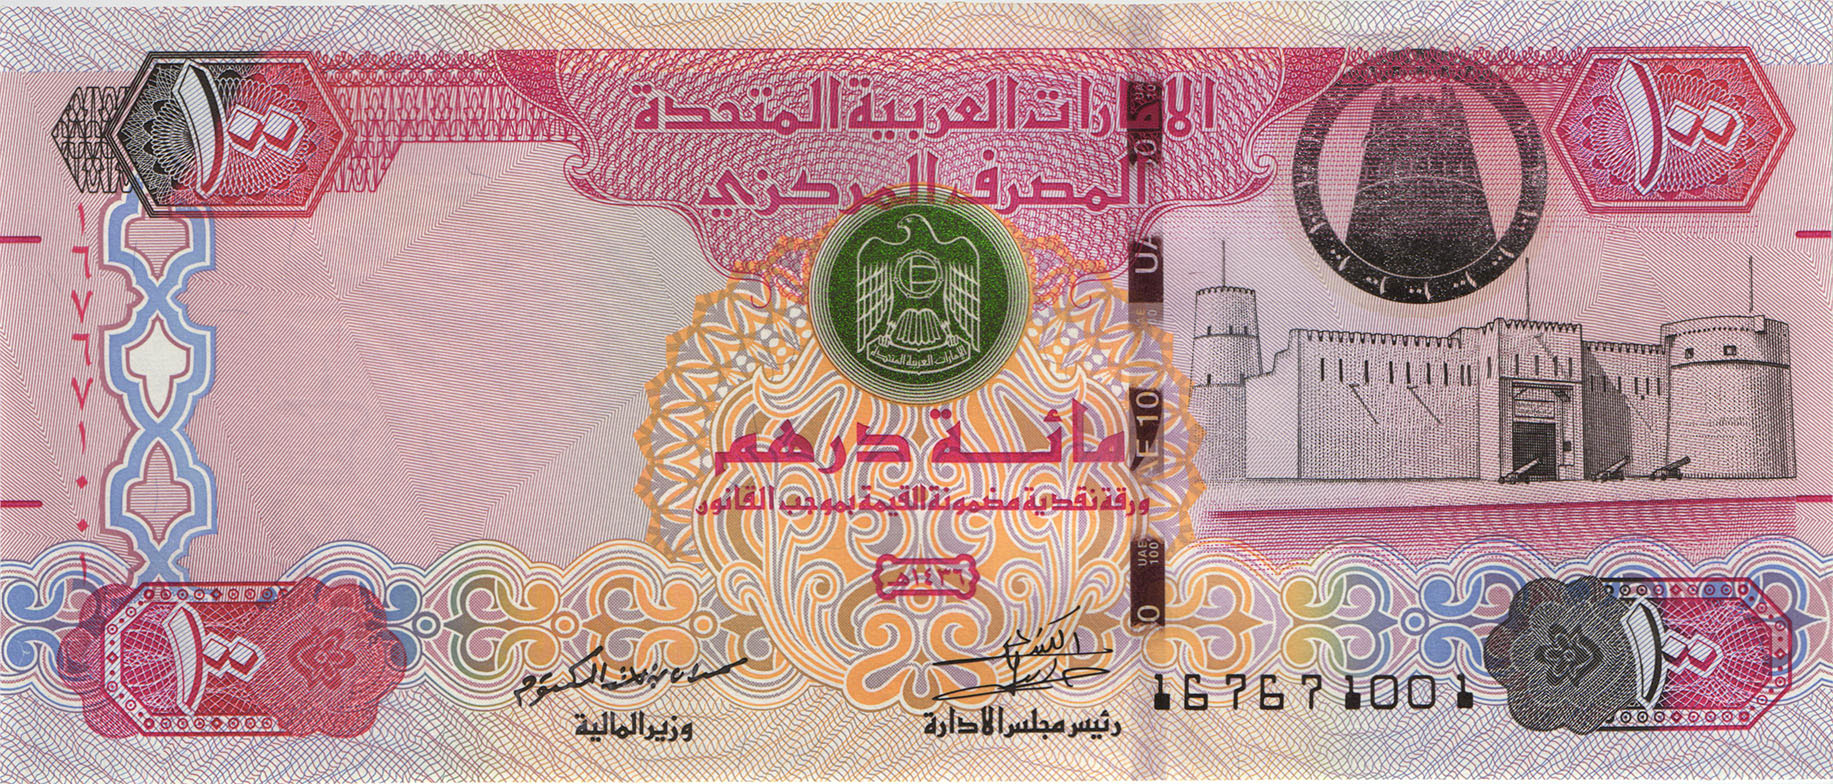 Курс дирхама уфа. Банкноты United arab Emirates,2008, 50 dirhams. 100 Дирхам ОАЭ. Дирхам ОАЭ бонны. Монета Объединённых арабских Эмиратов 100.